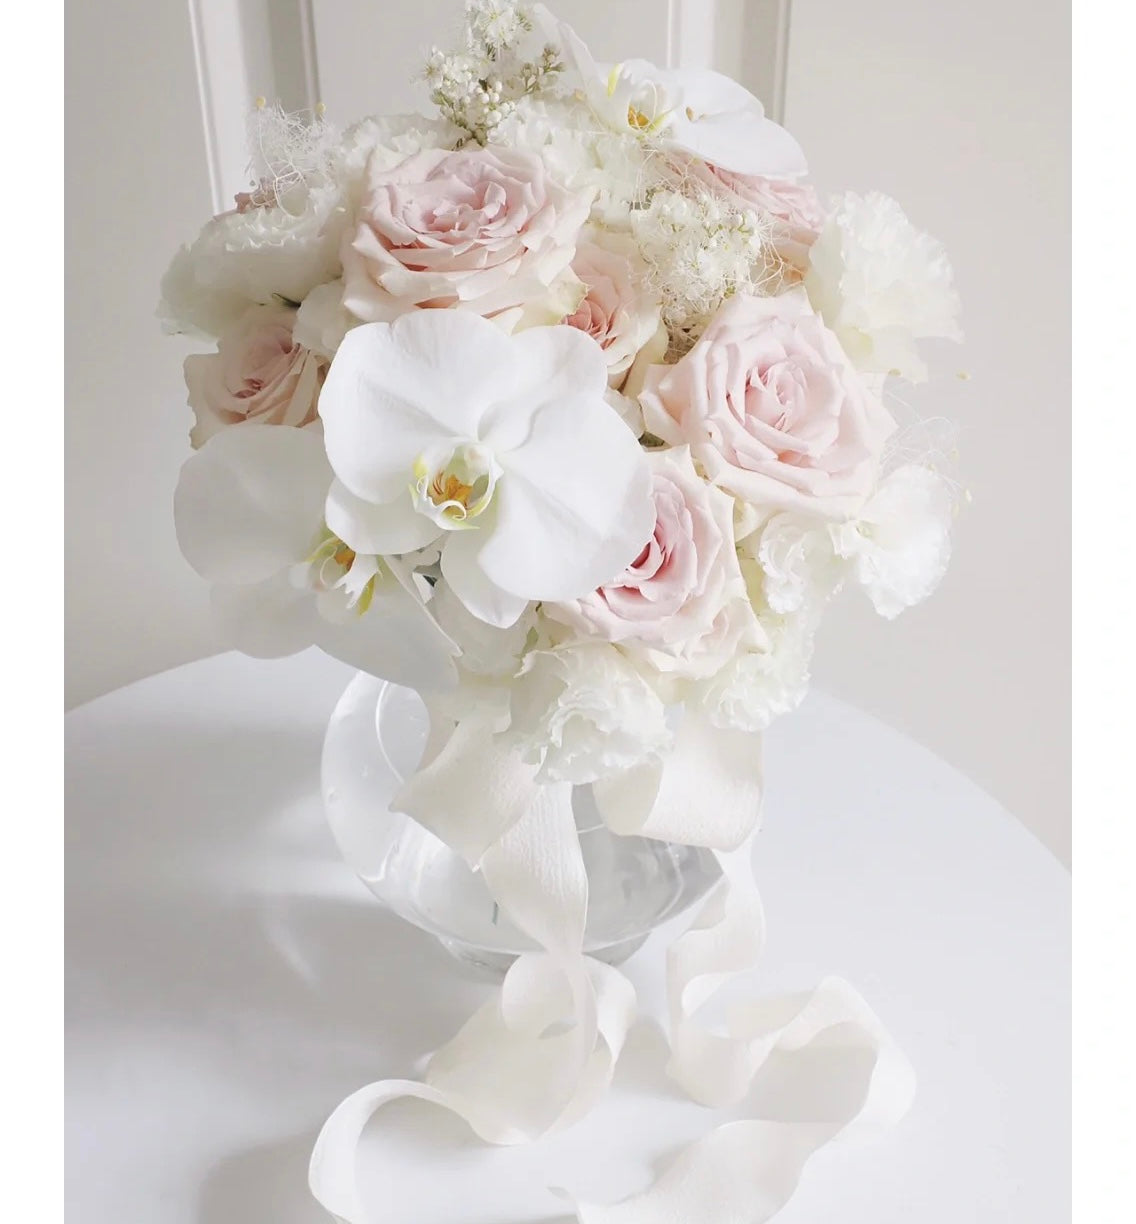 Classic Round Bridal Bouquet